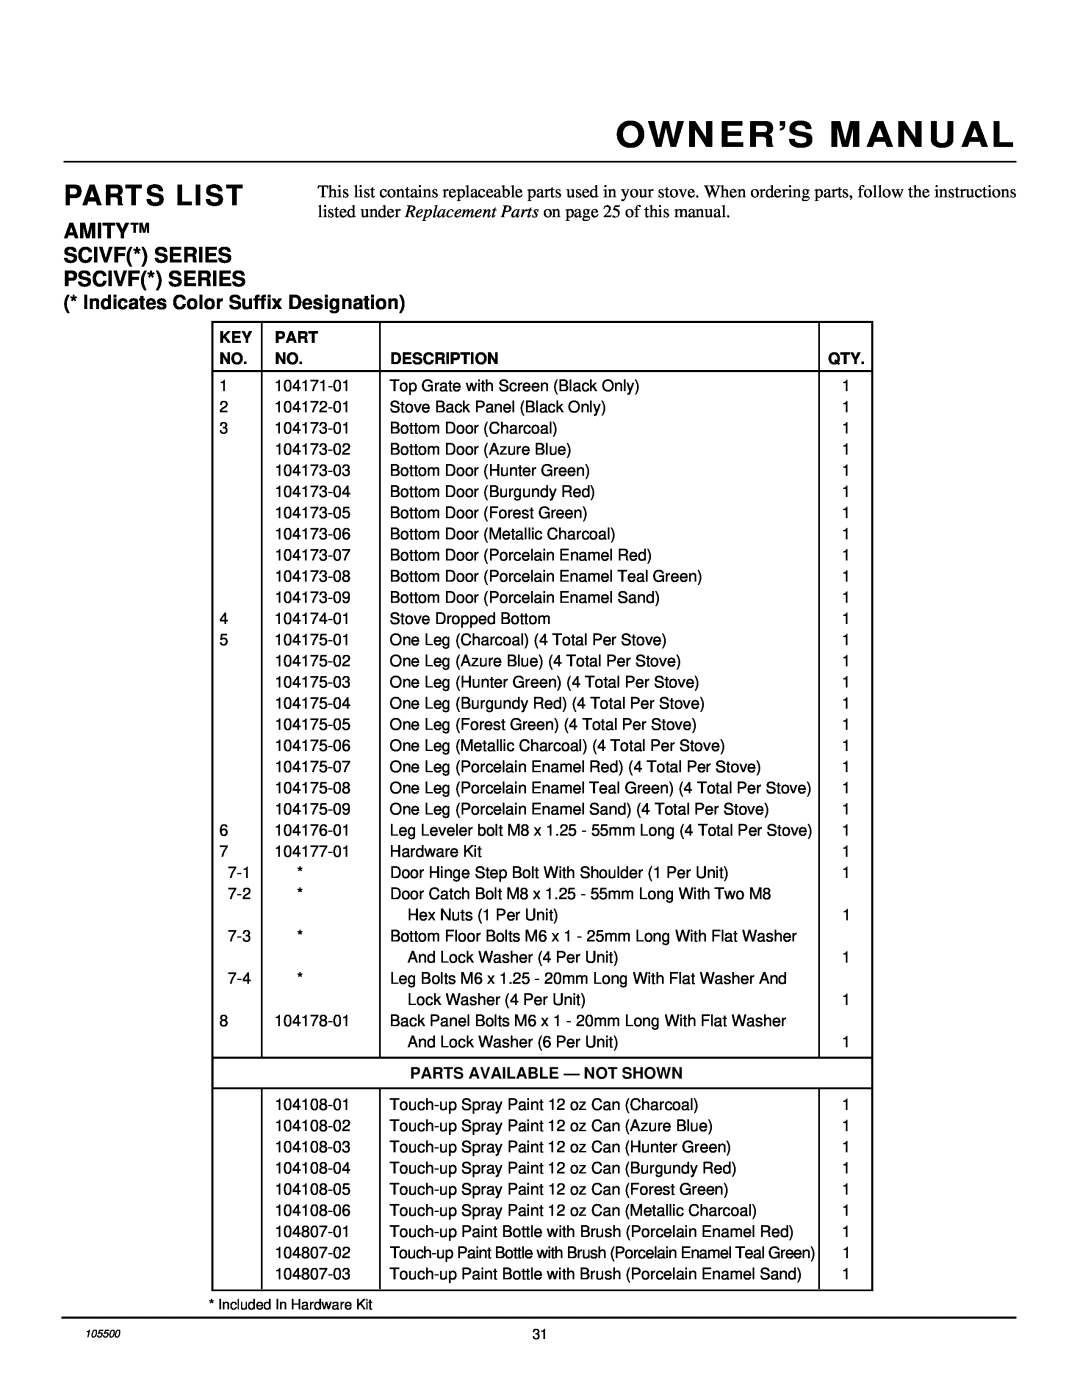 Vanguard Heating SBVBP(A) Parts List, Amity Scivf* Series Pscivf* Series, Indicates Color Suffix Designation, Description 